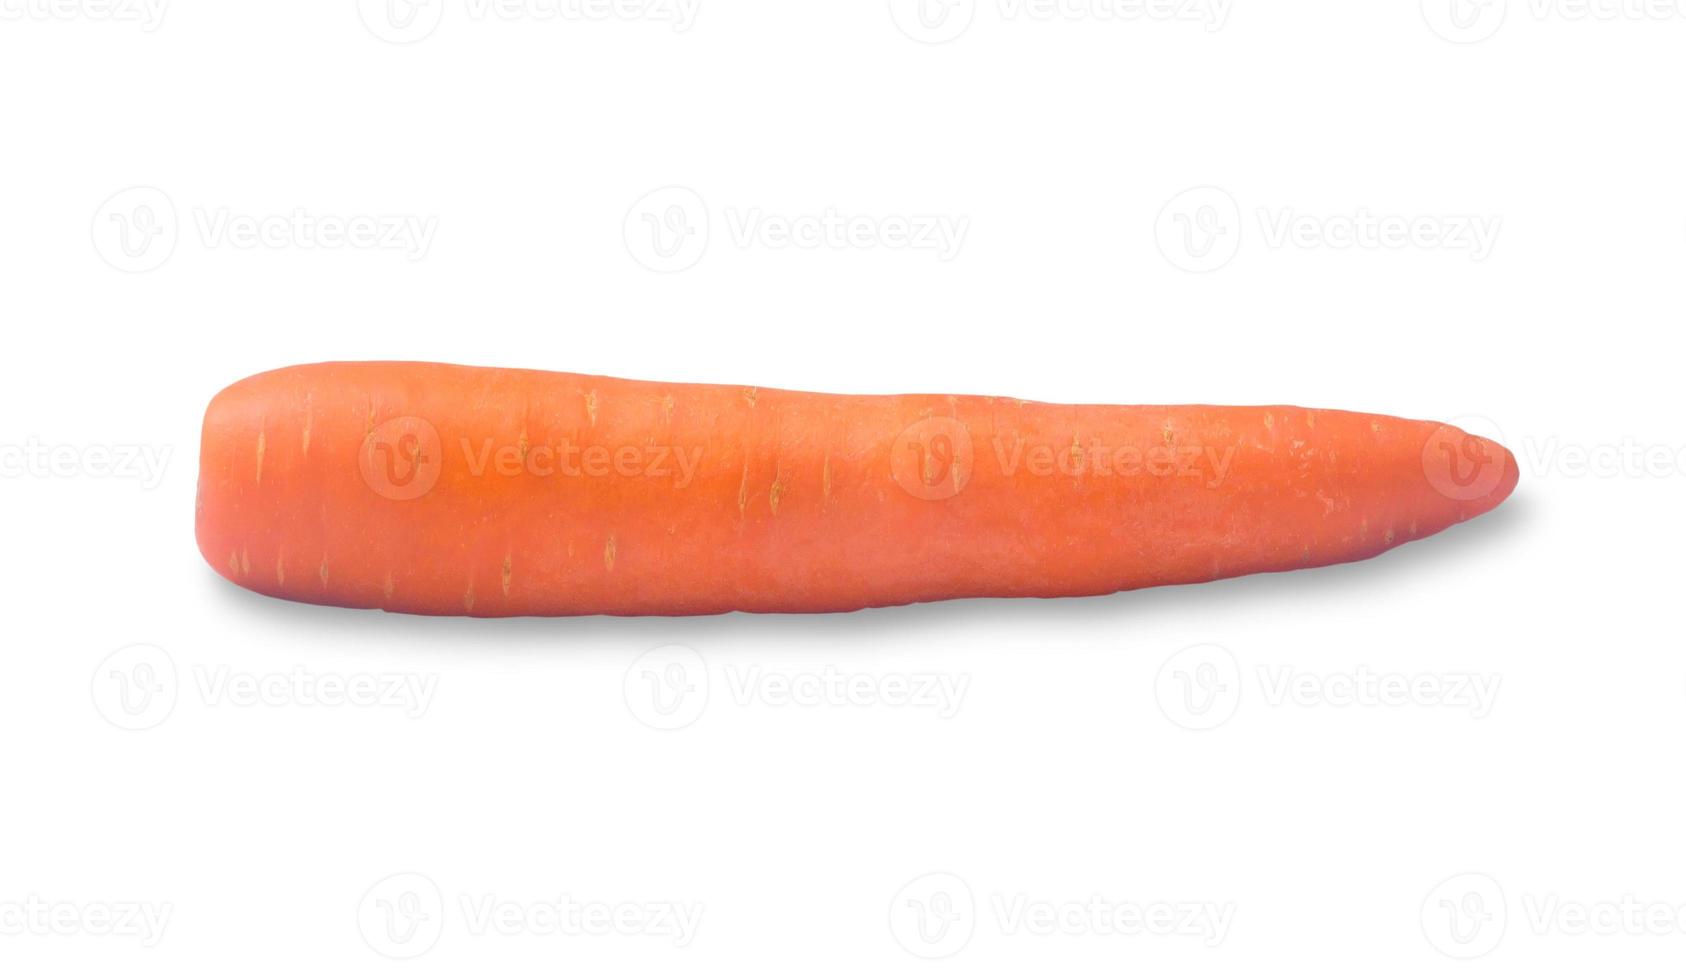 sola verdura de zanahoria naranja fresca aislada en fondo blanco con trazado de recorte foto